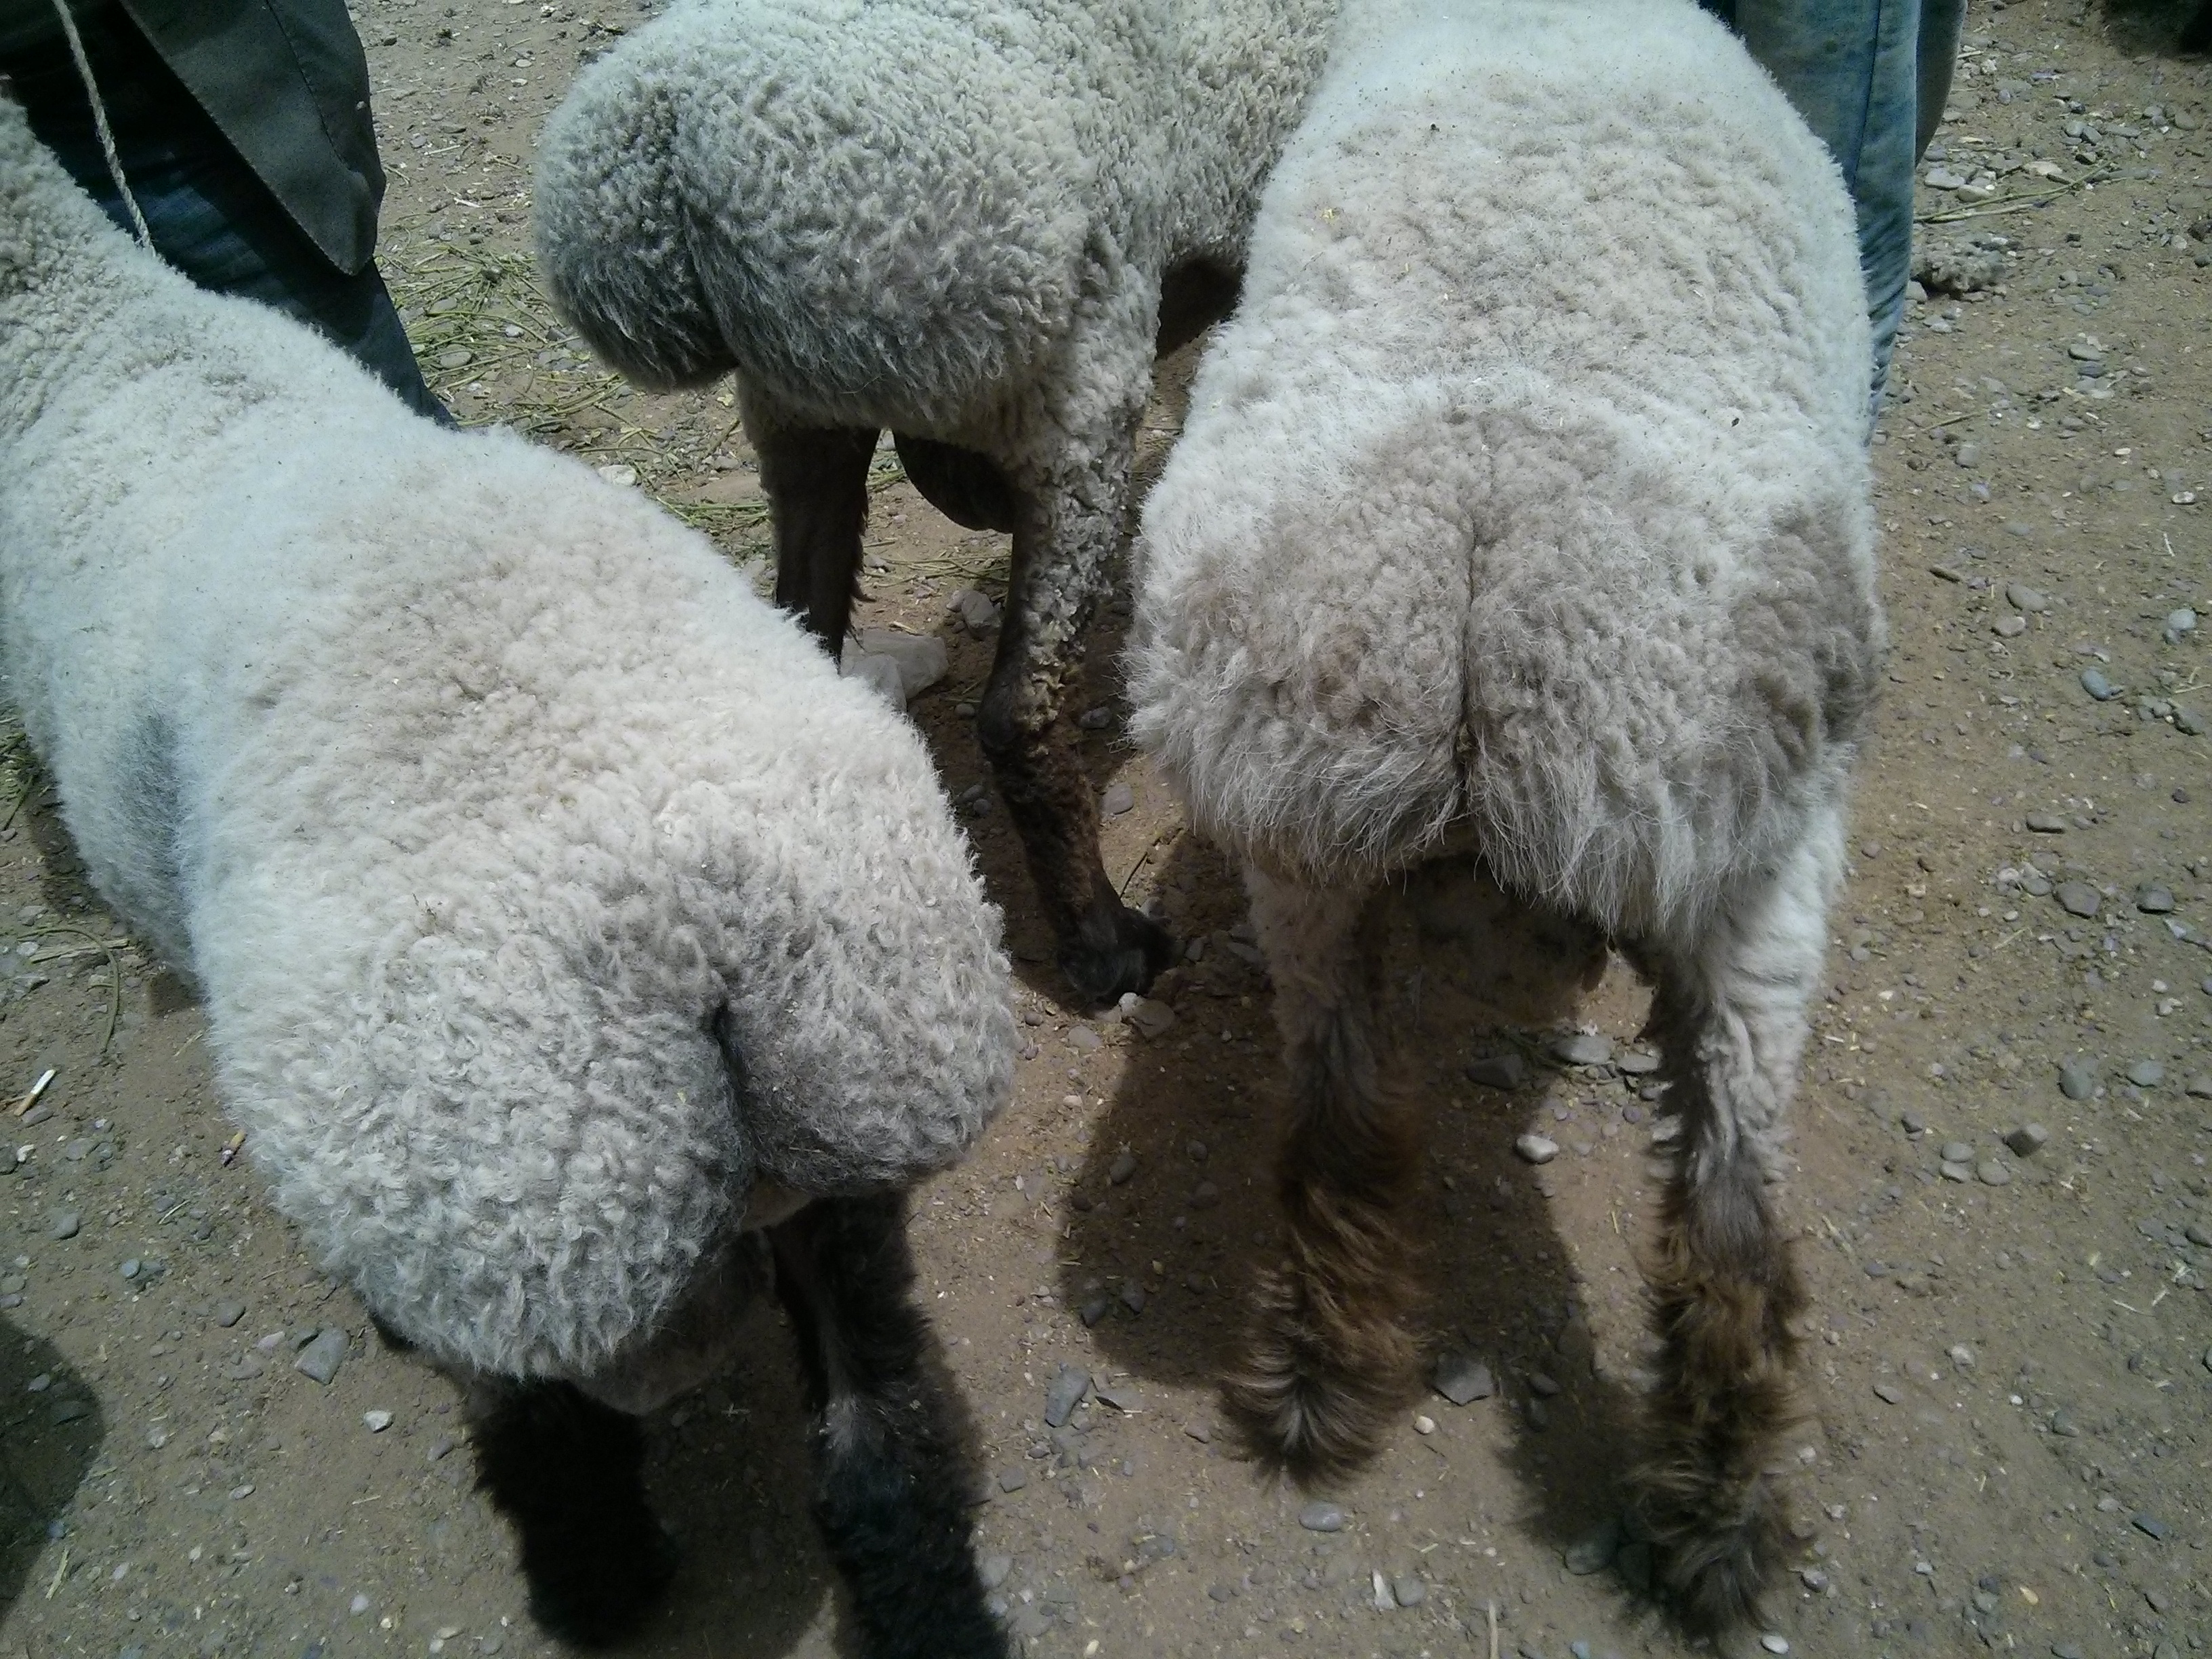 Fat bottom sheep at the Kashgar Sunday Market